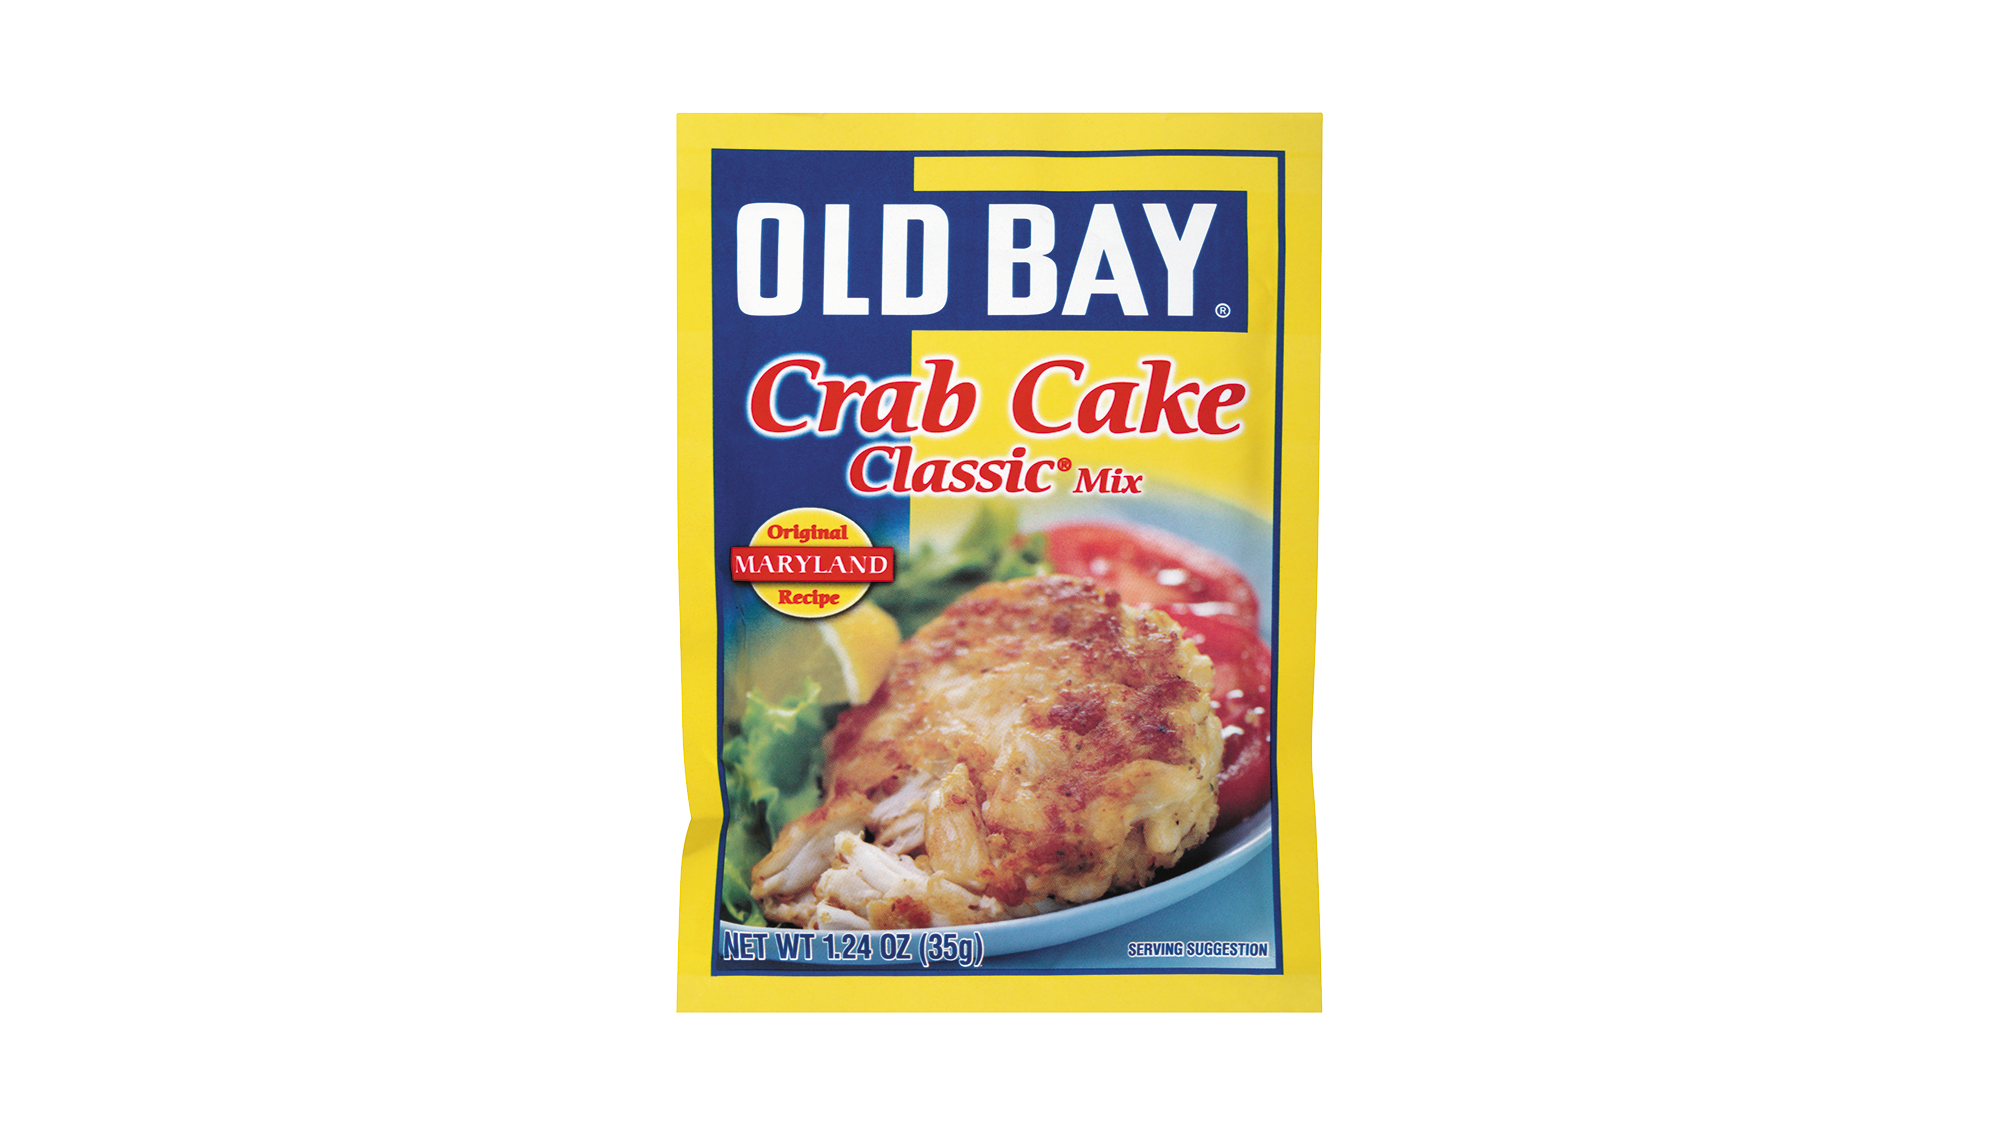 https://mccormick.widen.net/content/cxvb7gzkbp/original/old_bay_crab_cake_classic_mix_2000x1125.png